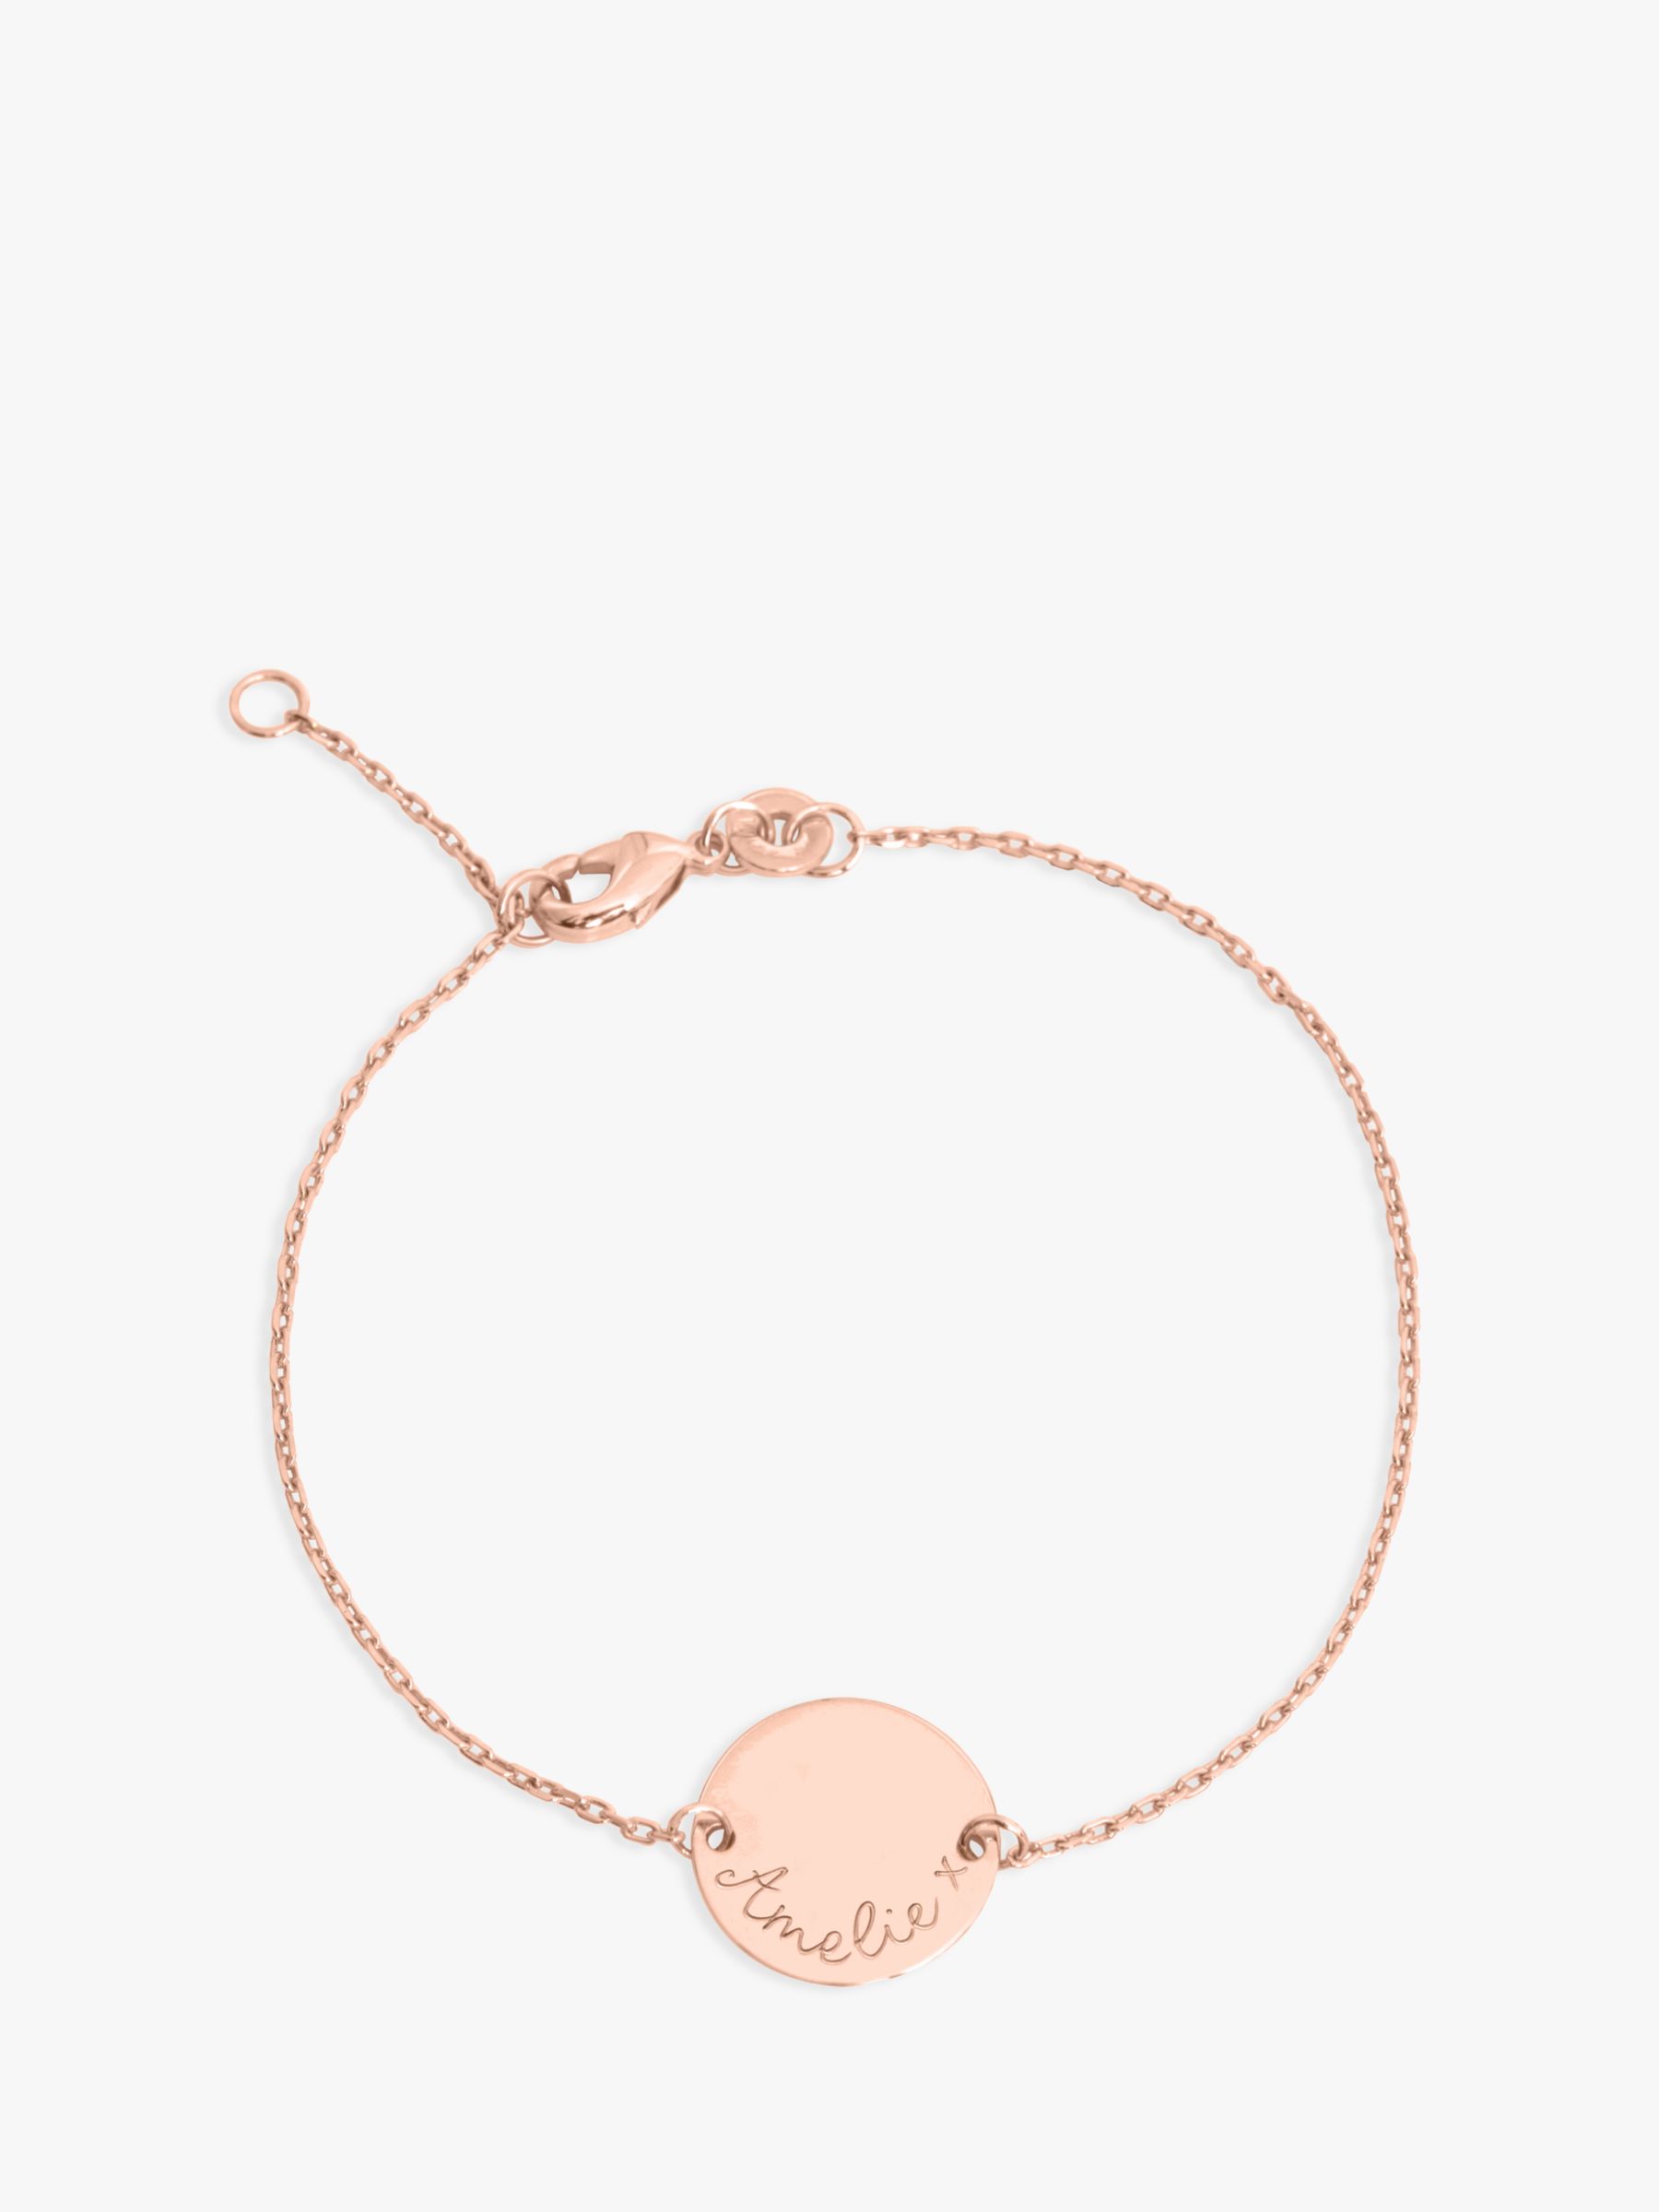 Merci Maman Personalised Pastille Chain Bracelet, Rose Gold